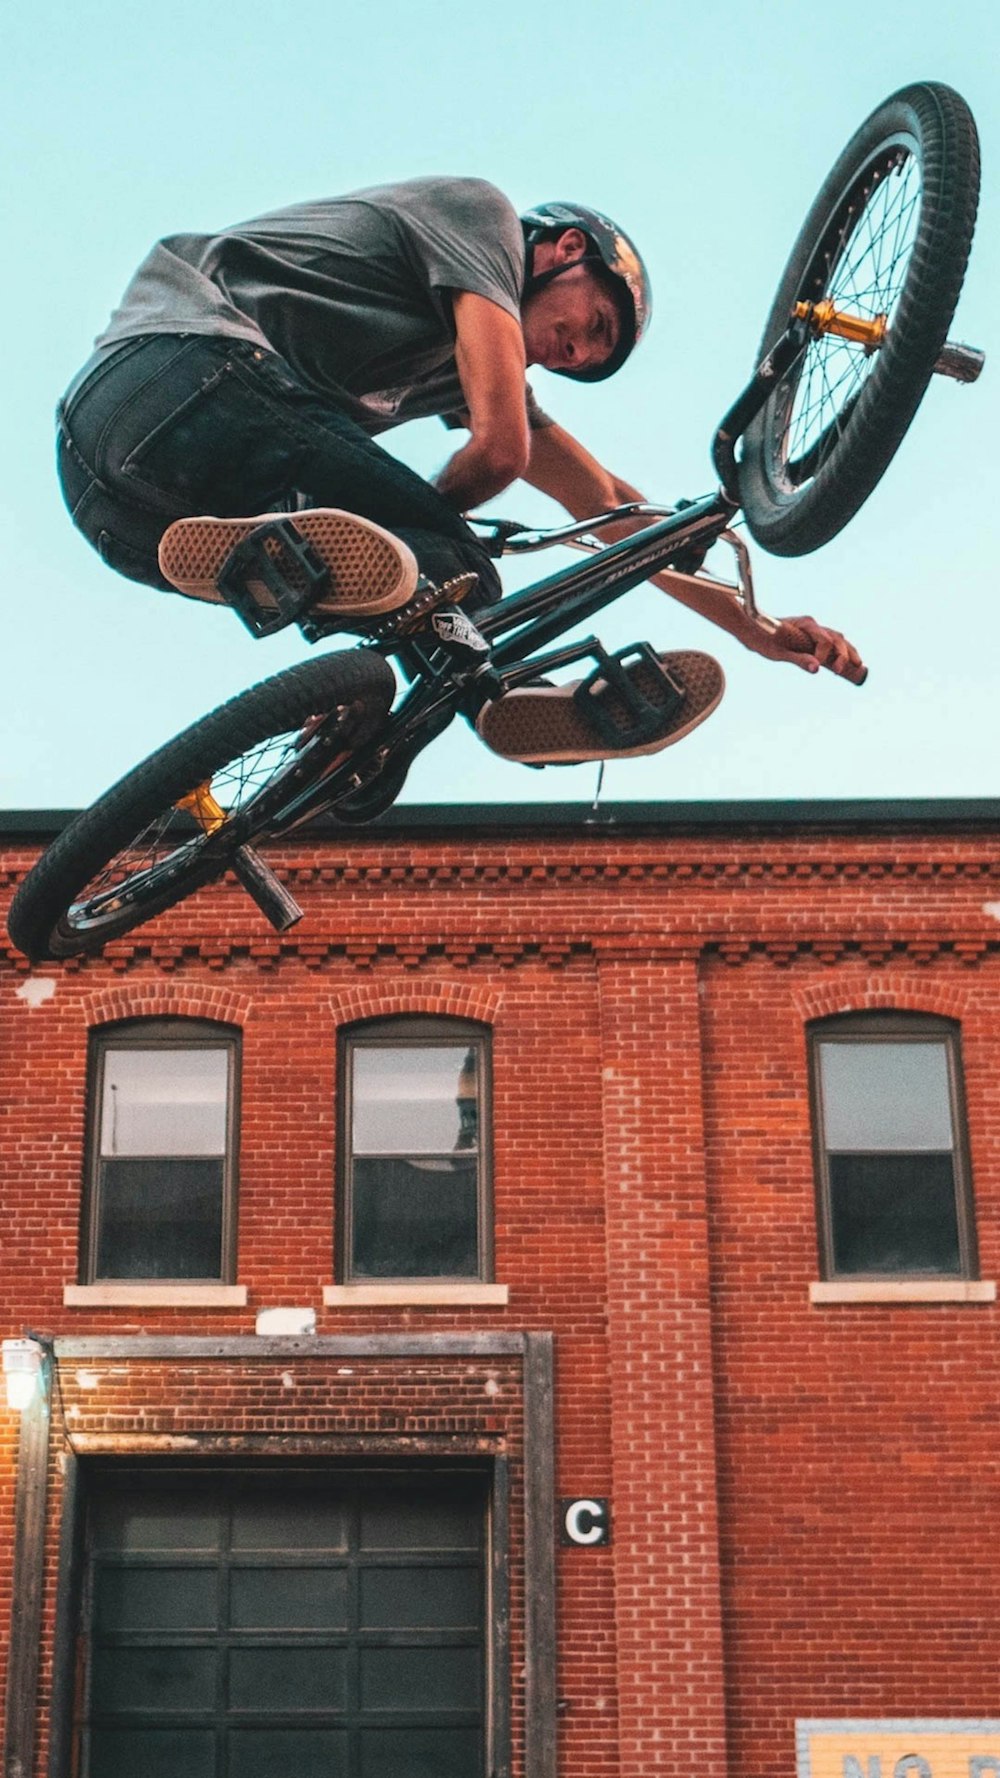 hombre montando en una bicicleta BMX negra en el aire